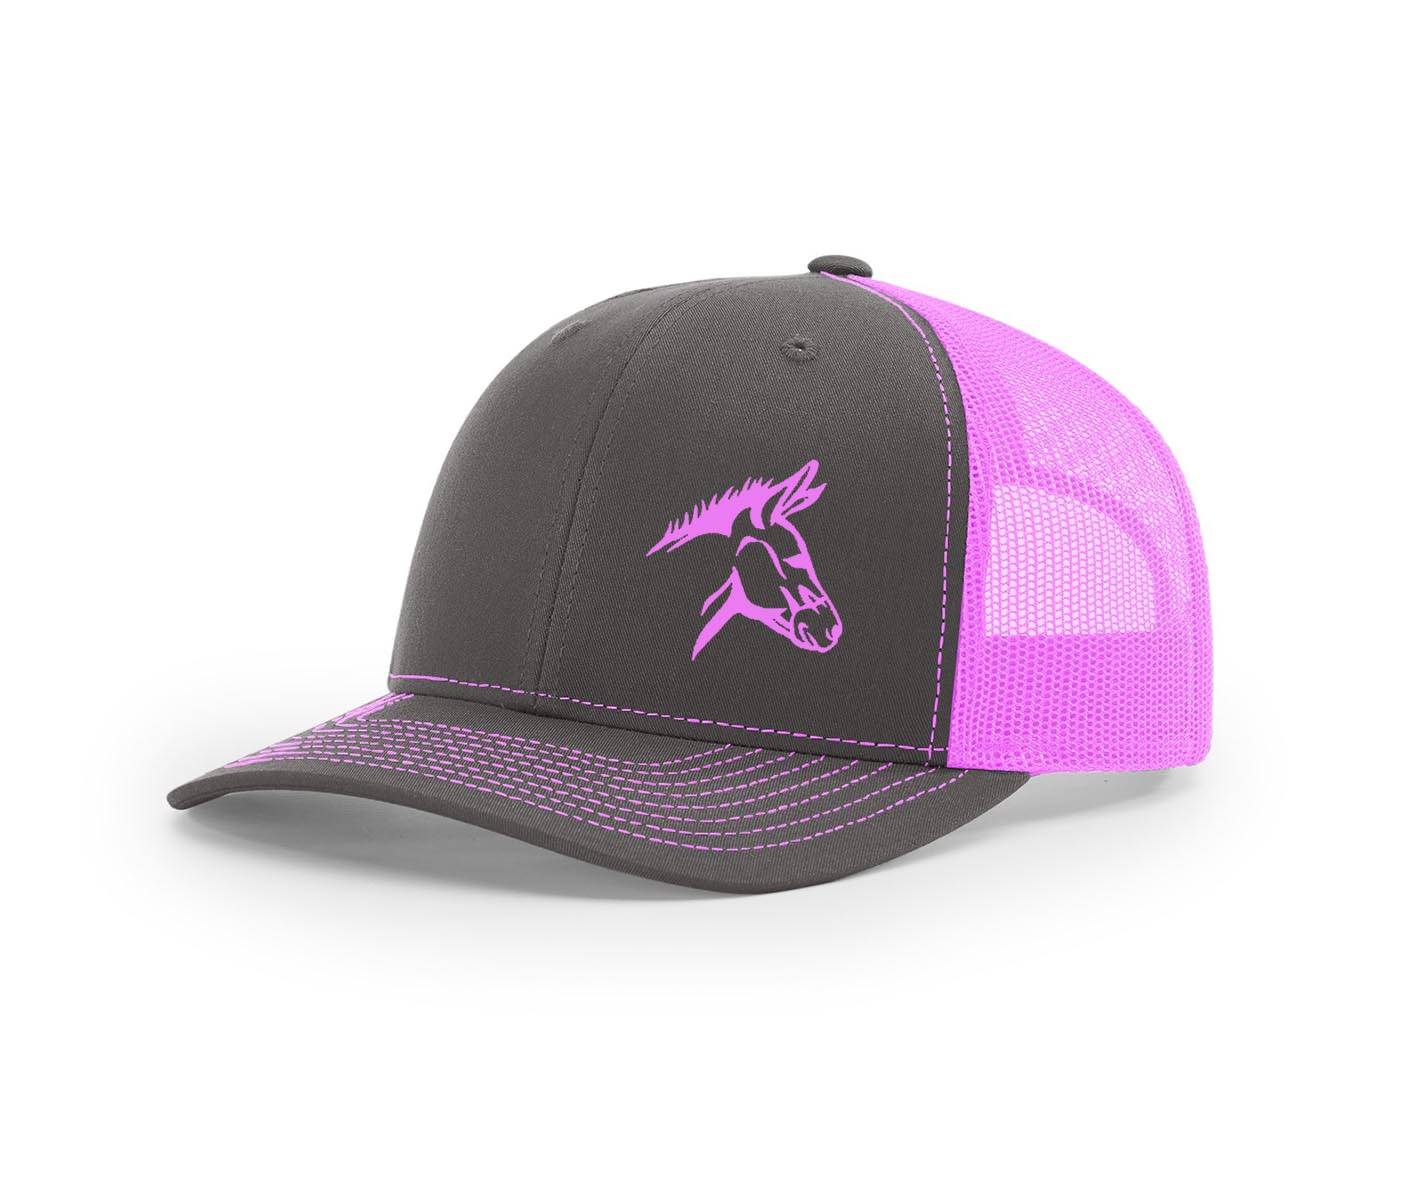 Mule Head Mesh Swamp Cracker Trucker Hat, Charcoal/Neon Pink